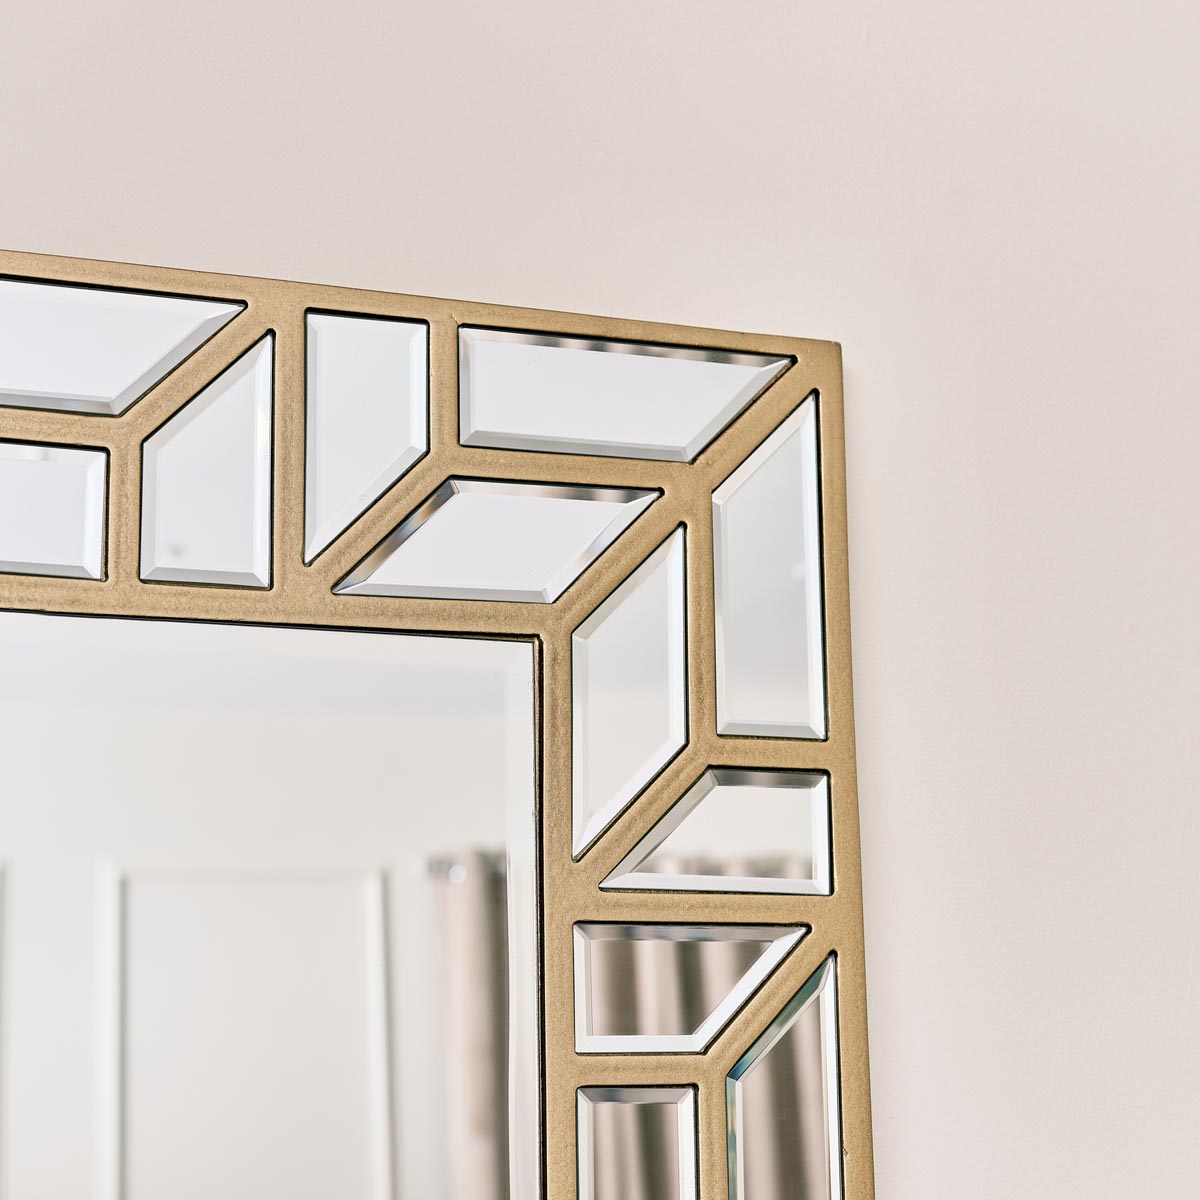 Large Gold Art Deco Framed Mirror 70cm x 150cm